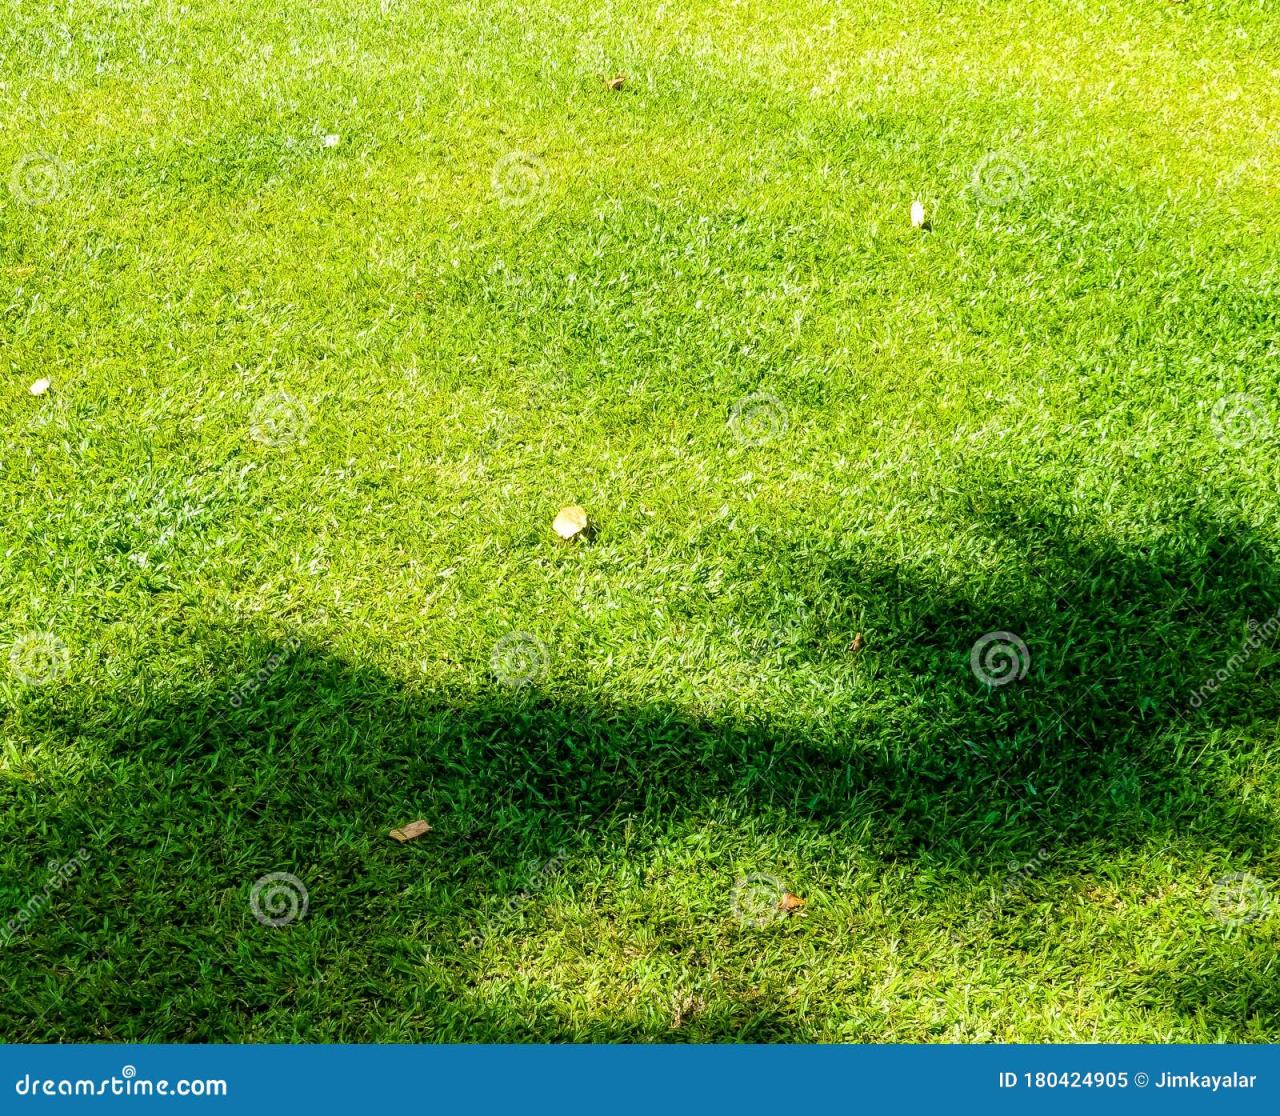 Beautiful Freshly Cut Manicured Grass Stock Image - Image of lush, copy: 180424905